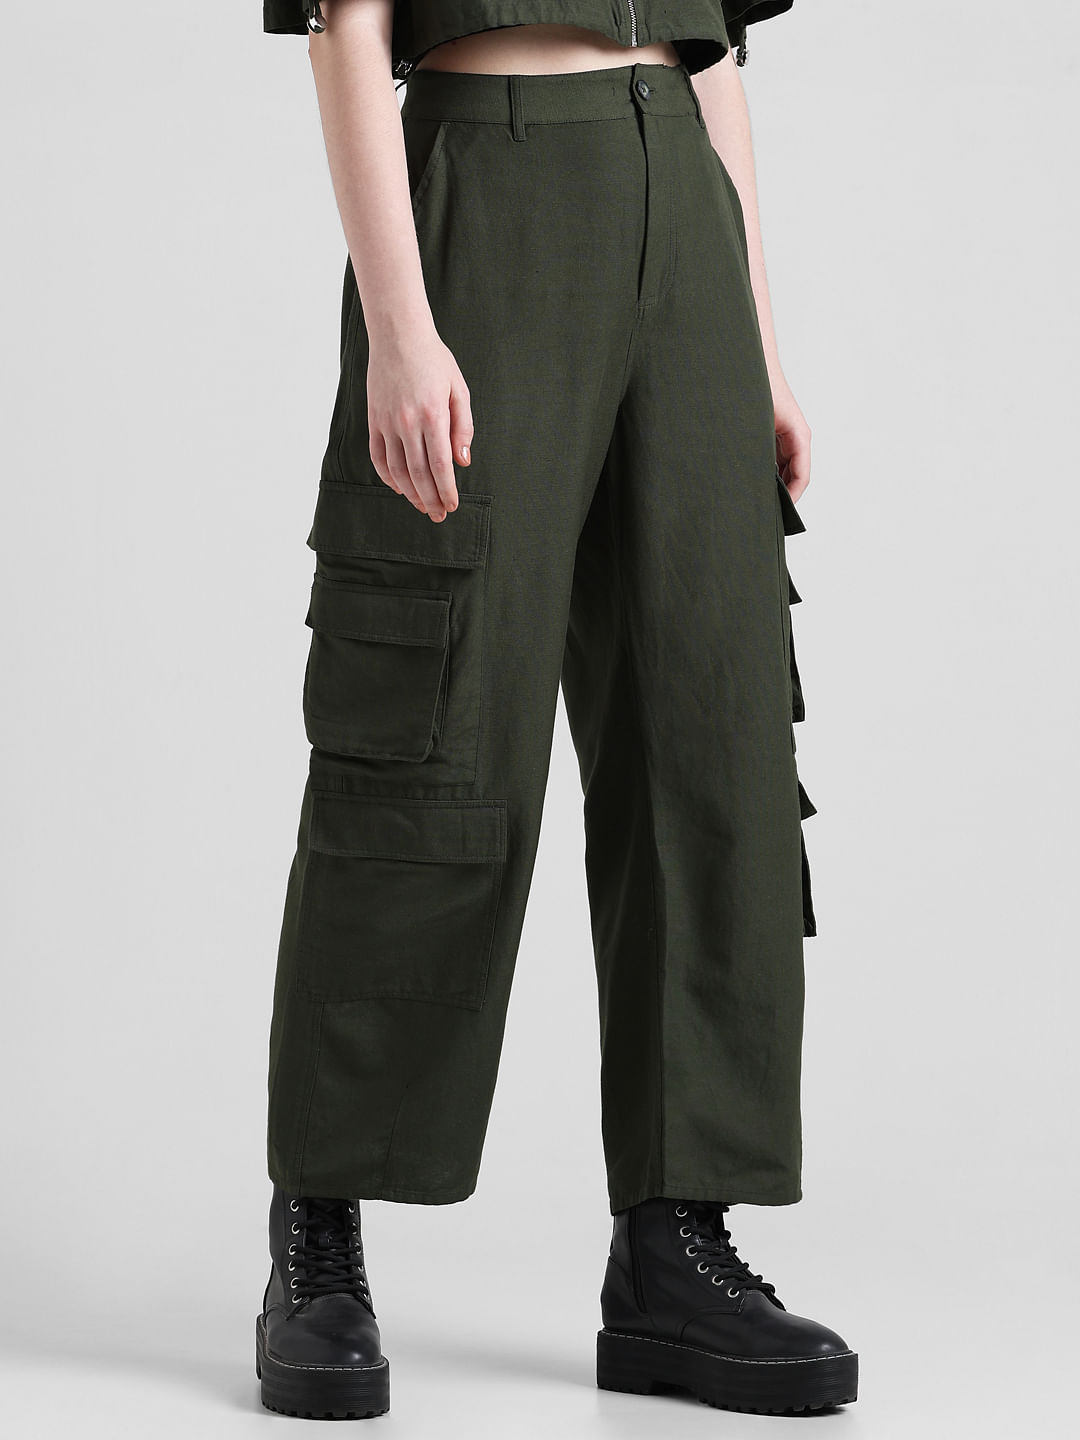 Sofia Richie Grainge's Zigzag Pants Are Perfect For Summer